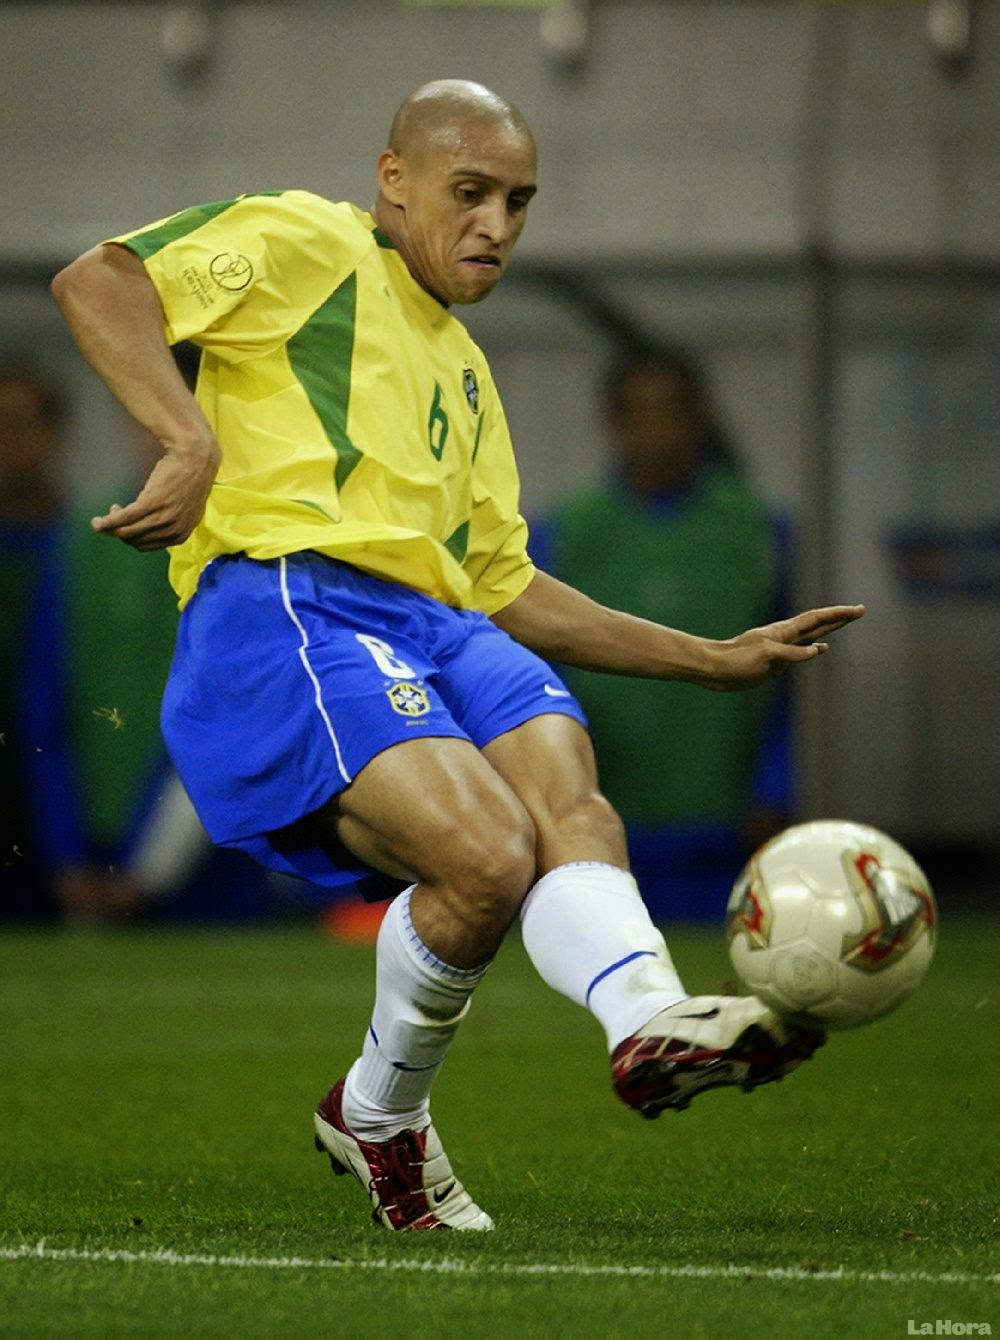 Biografi Pemain Sepak Bola Dunia Roberto Carlos Da Silva Rocha